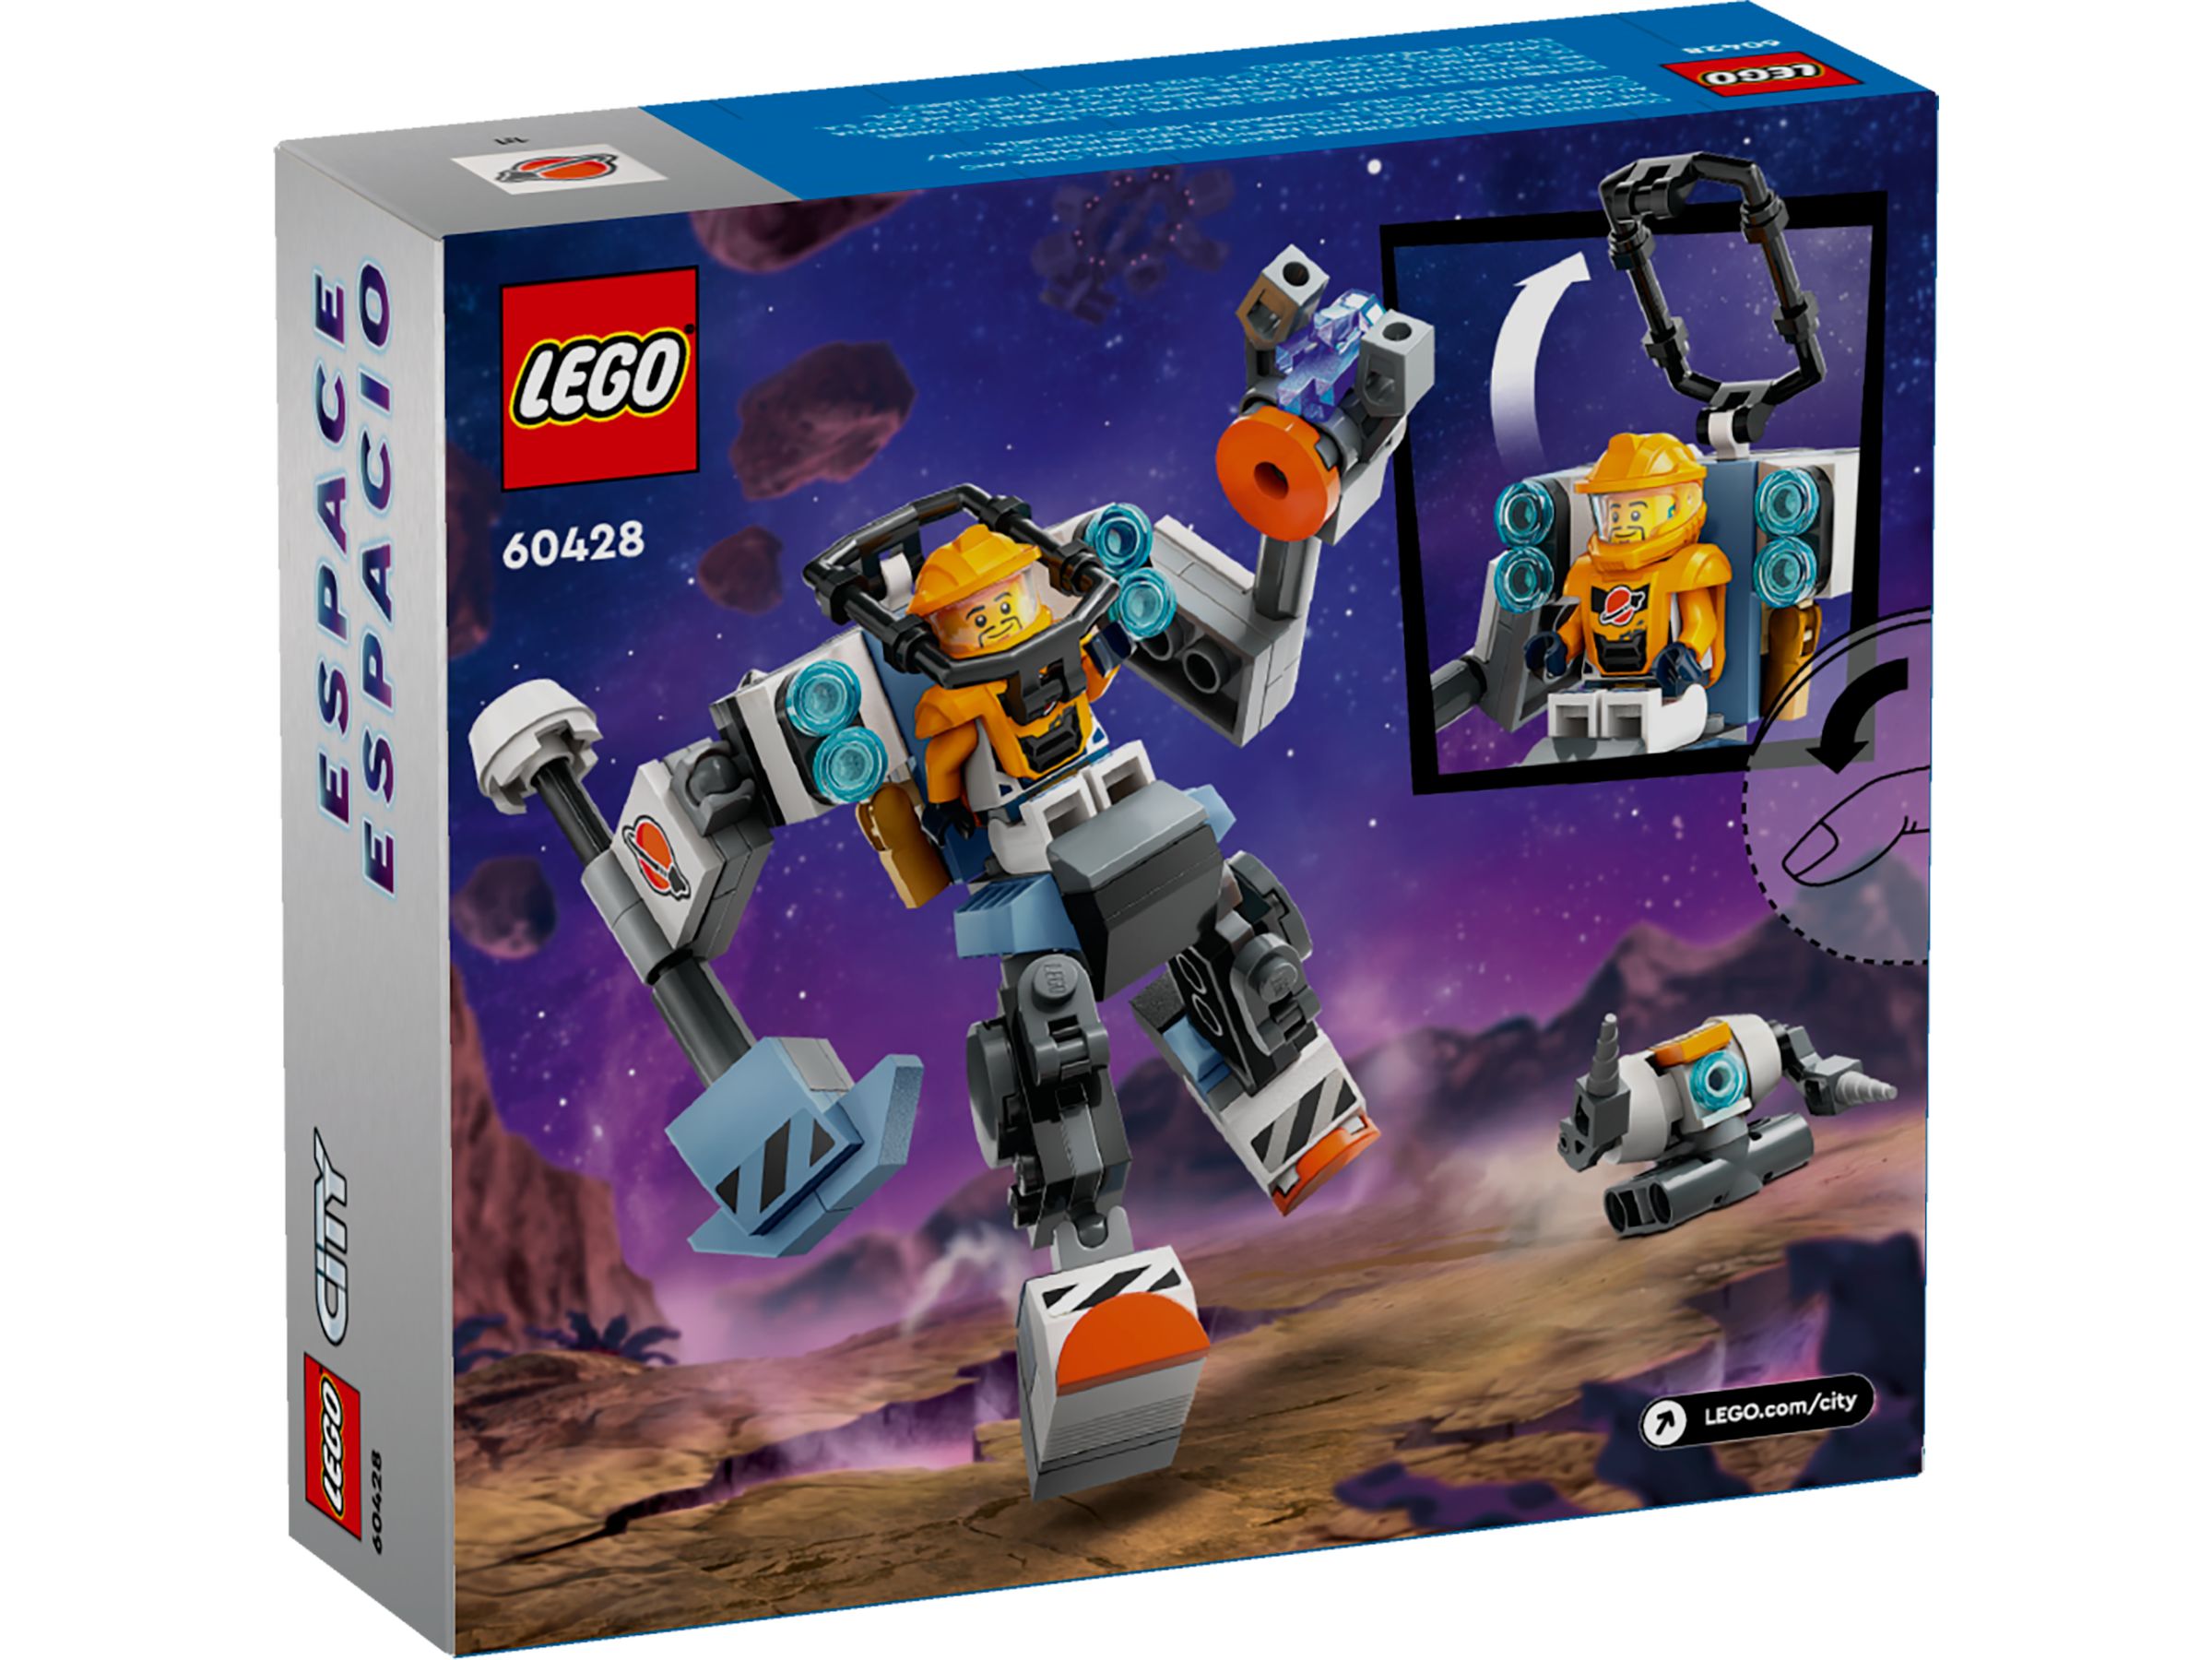 LEGO City 60428 Weltraum-Mech LEGO_60428_Box5_v39.jpg